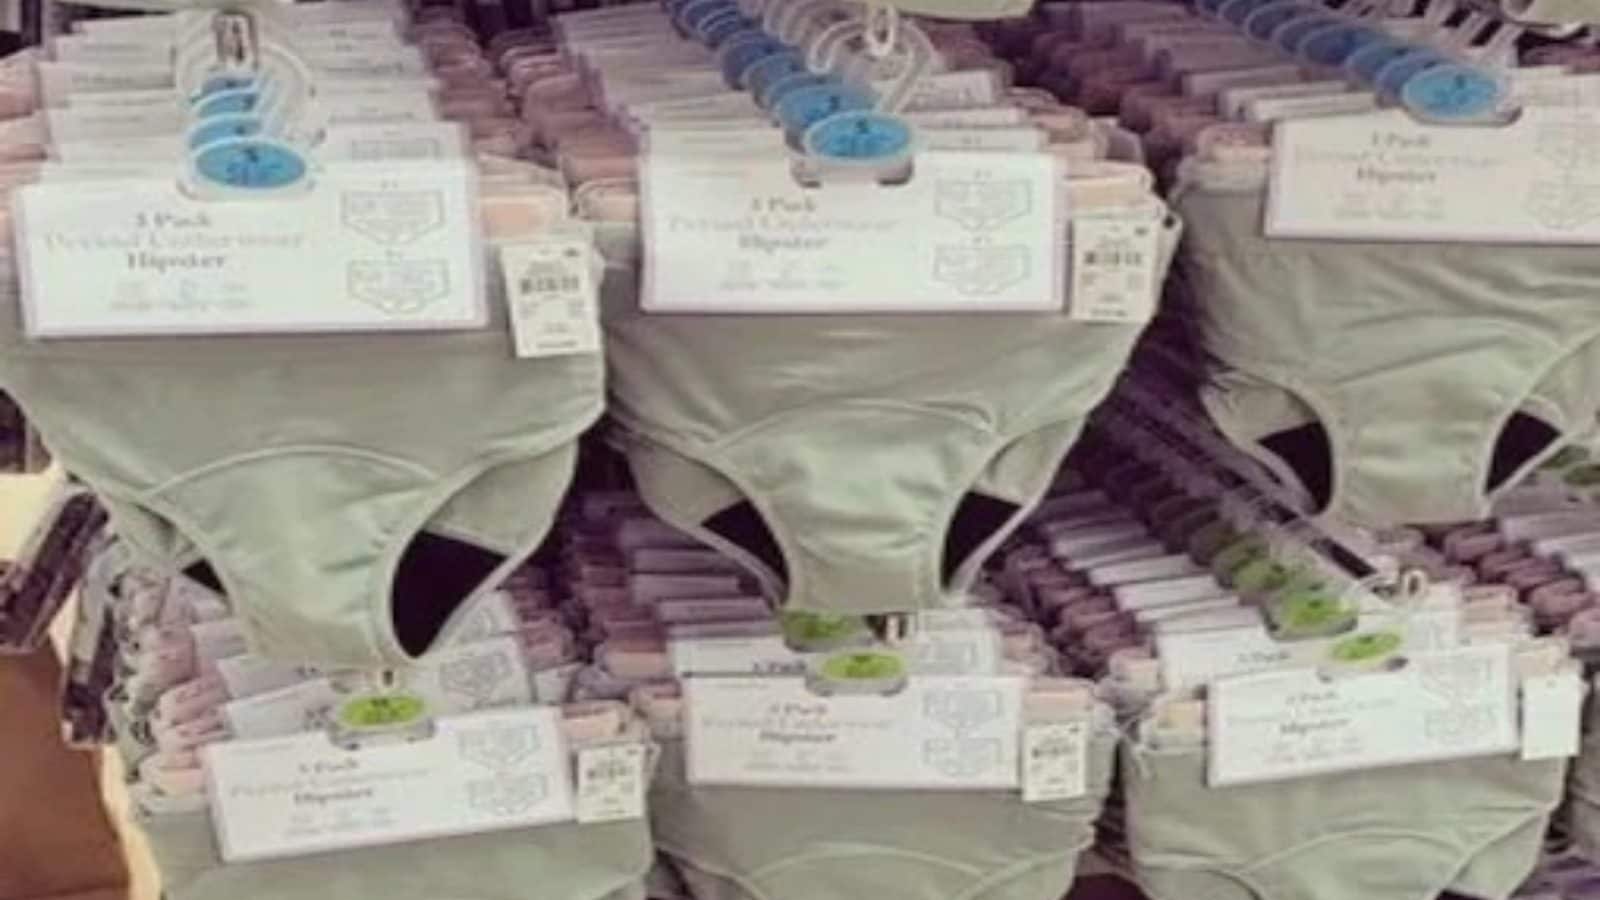 Irish Fashion Retailer Launches New Range of Reusable Period Underwear -  News18